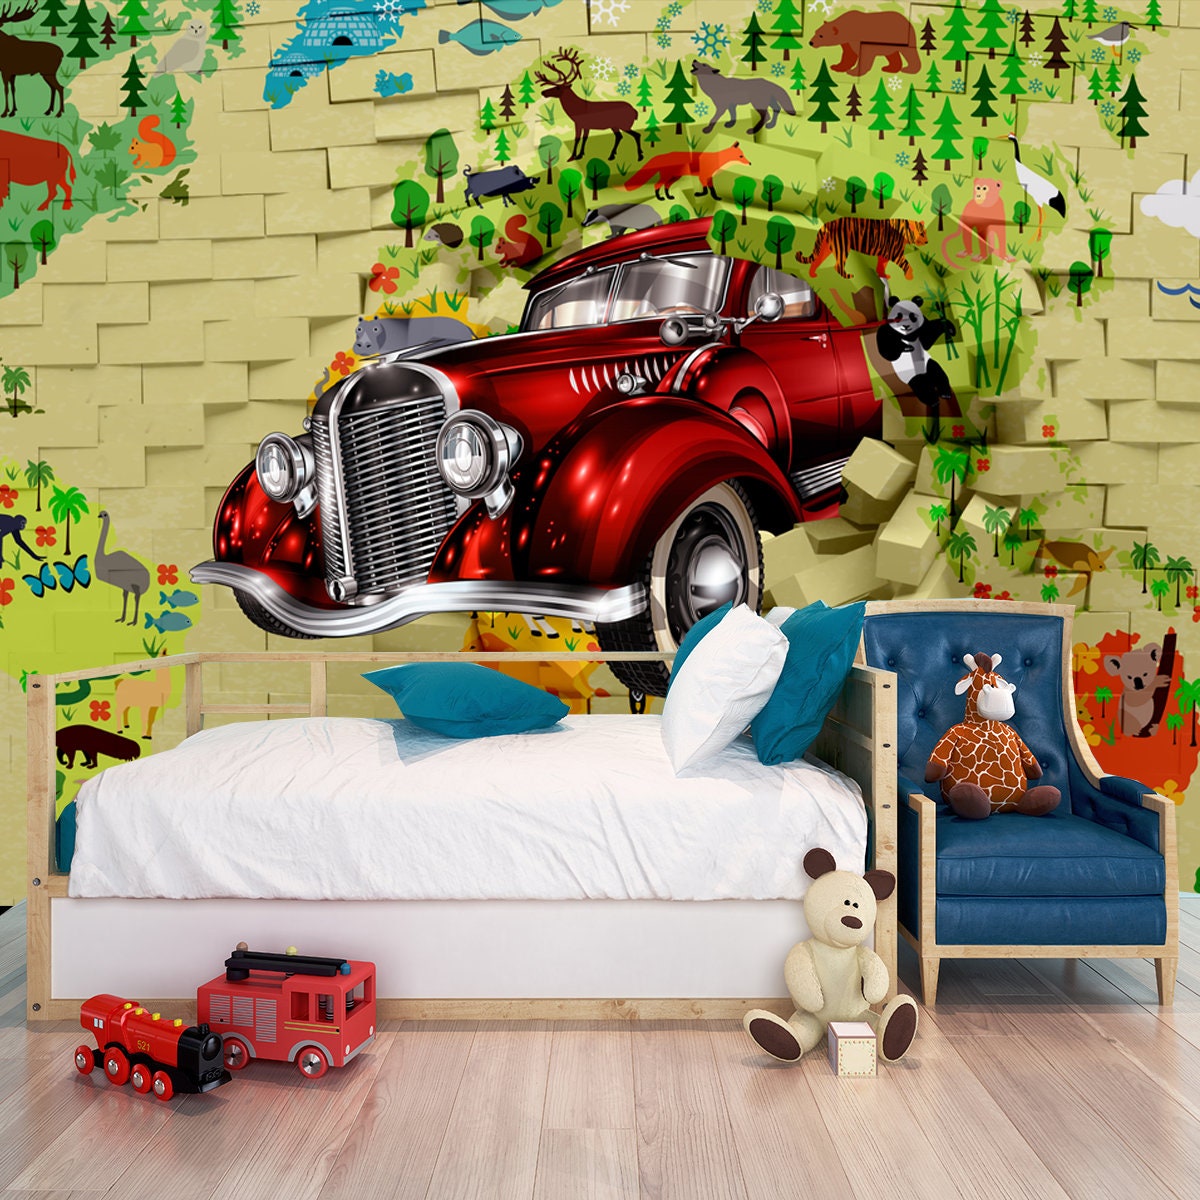 3d Mural Wallpaper Broken Wall Bricks and Red Classic Car Wallpaper Boy Bedroom Mural